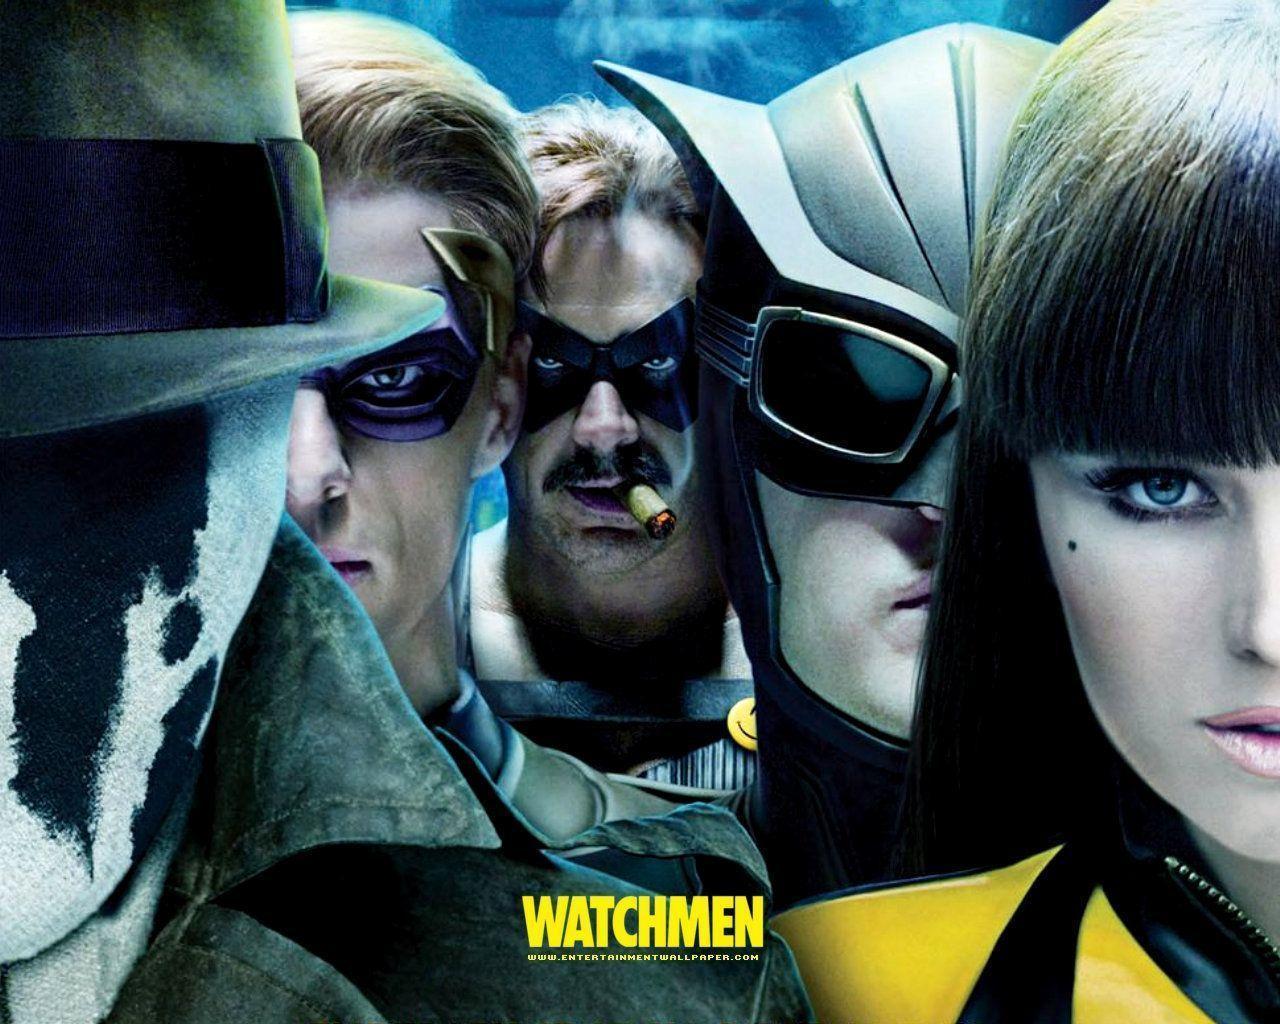 Fondos de pantalla de Watchmen. Wallpaper de Watchmen. Fondos